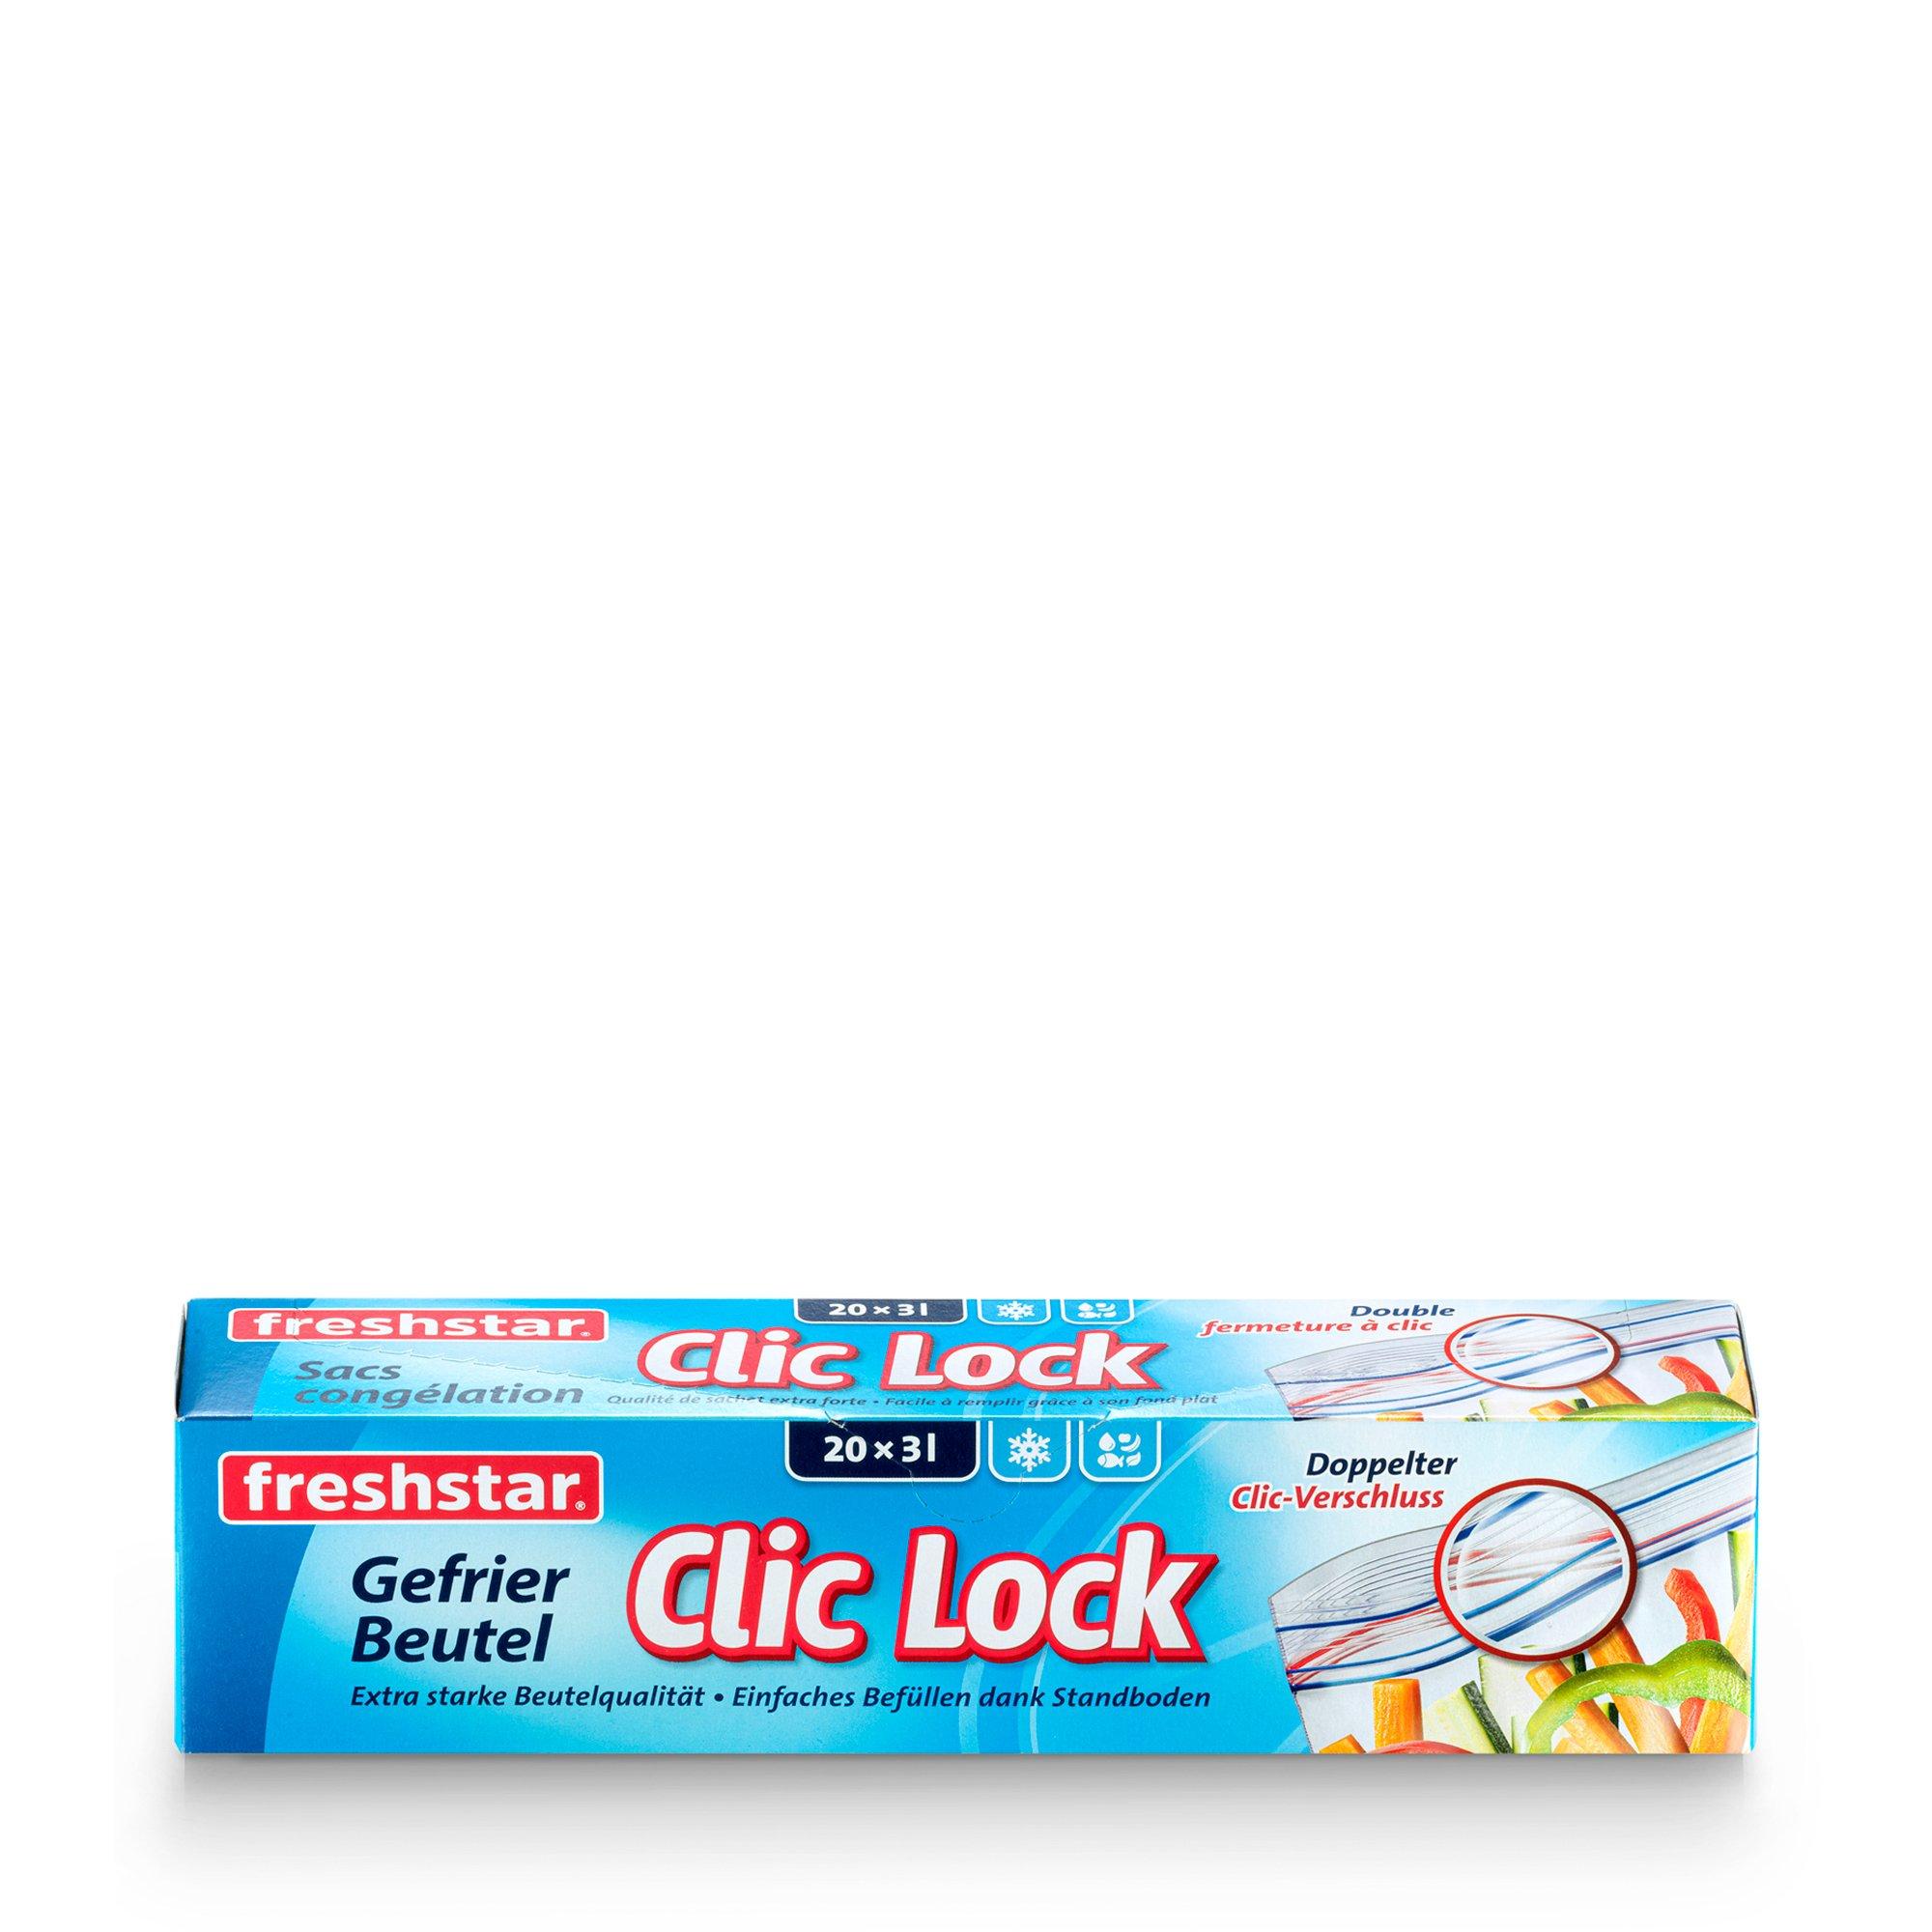 Image of Freshstar Gefrierbeutel Clic-Lock - 3 L